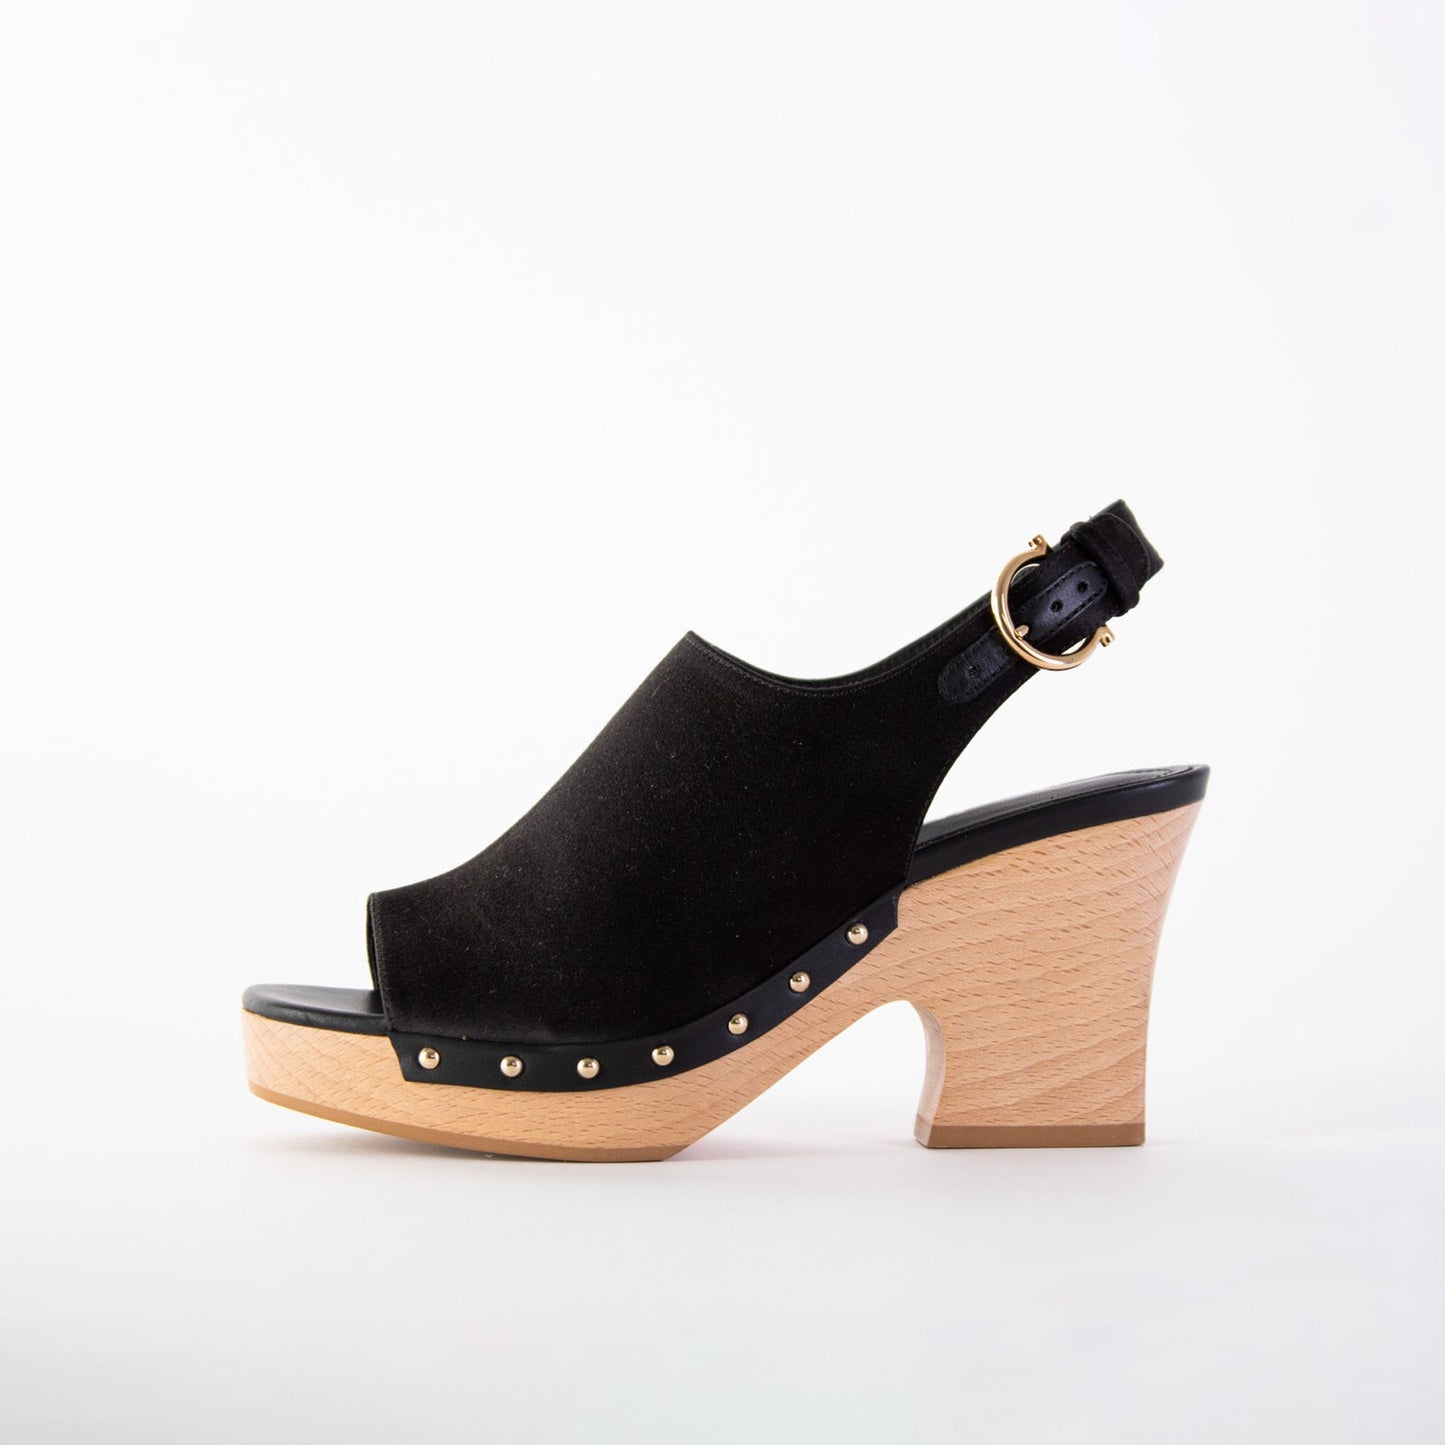 Salvatore Ferragamo Susanne Black Leather and Fabric Wedge Sandals